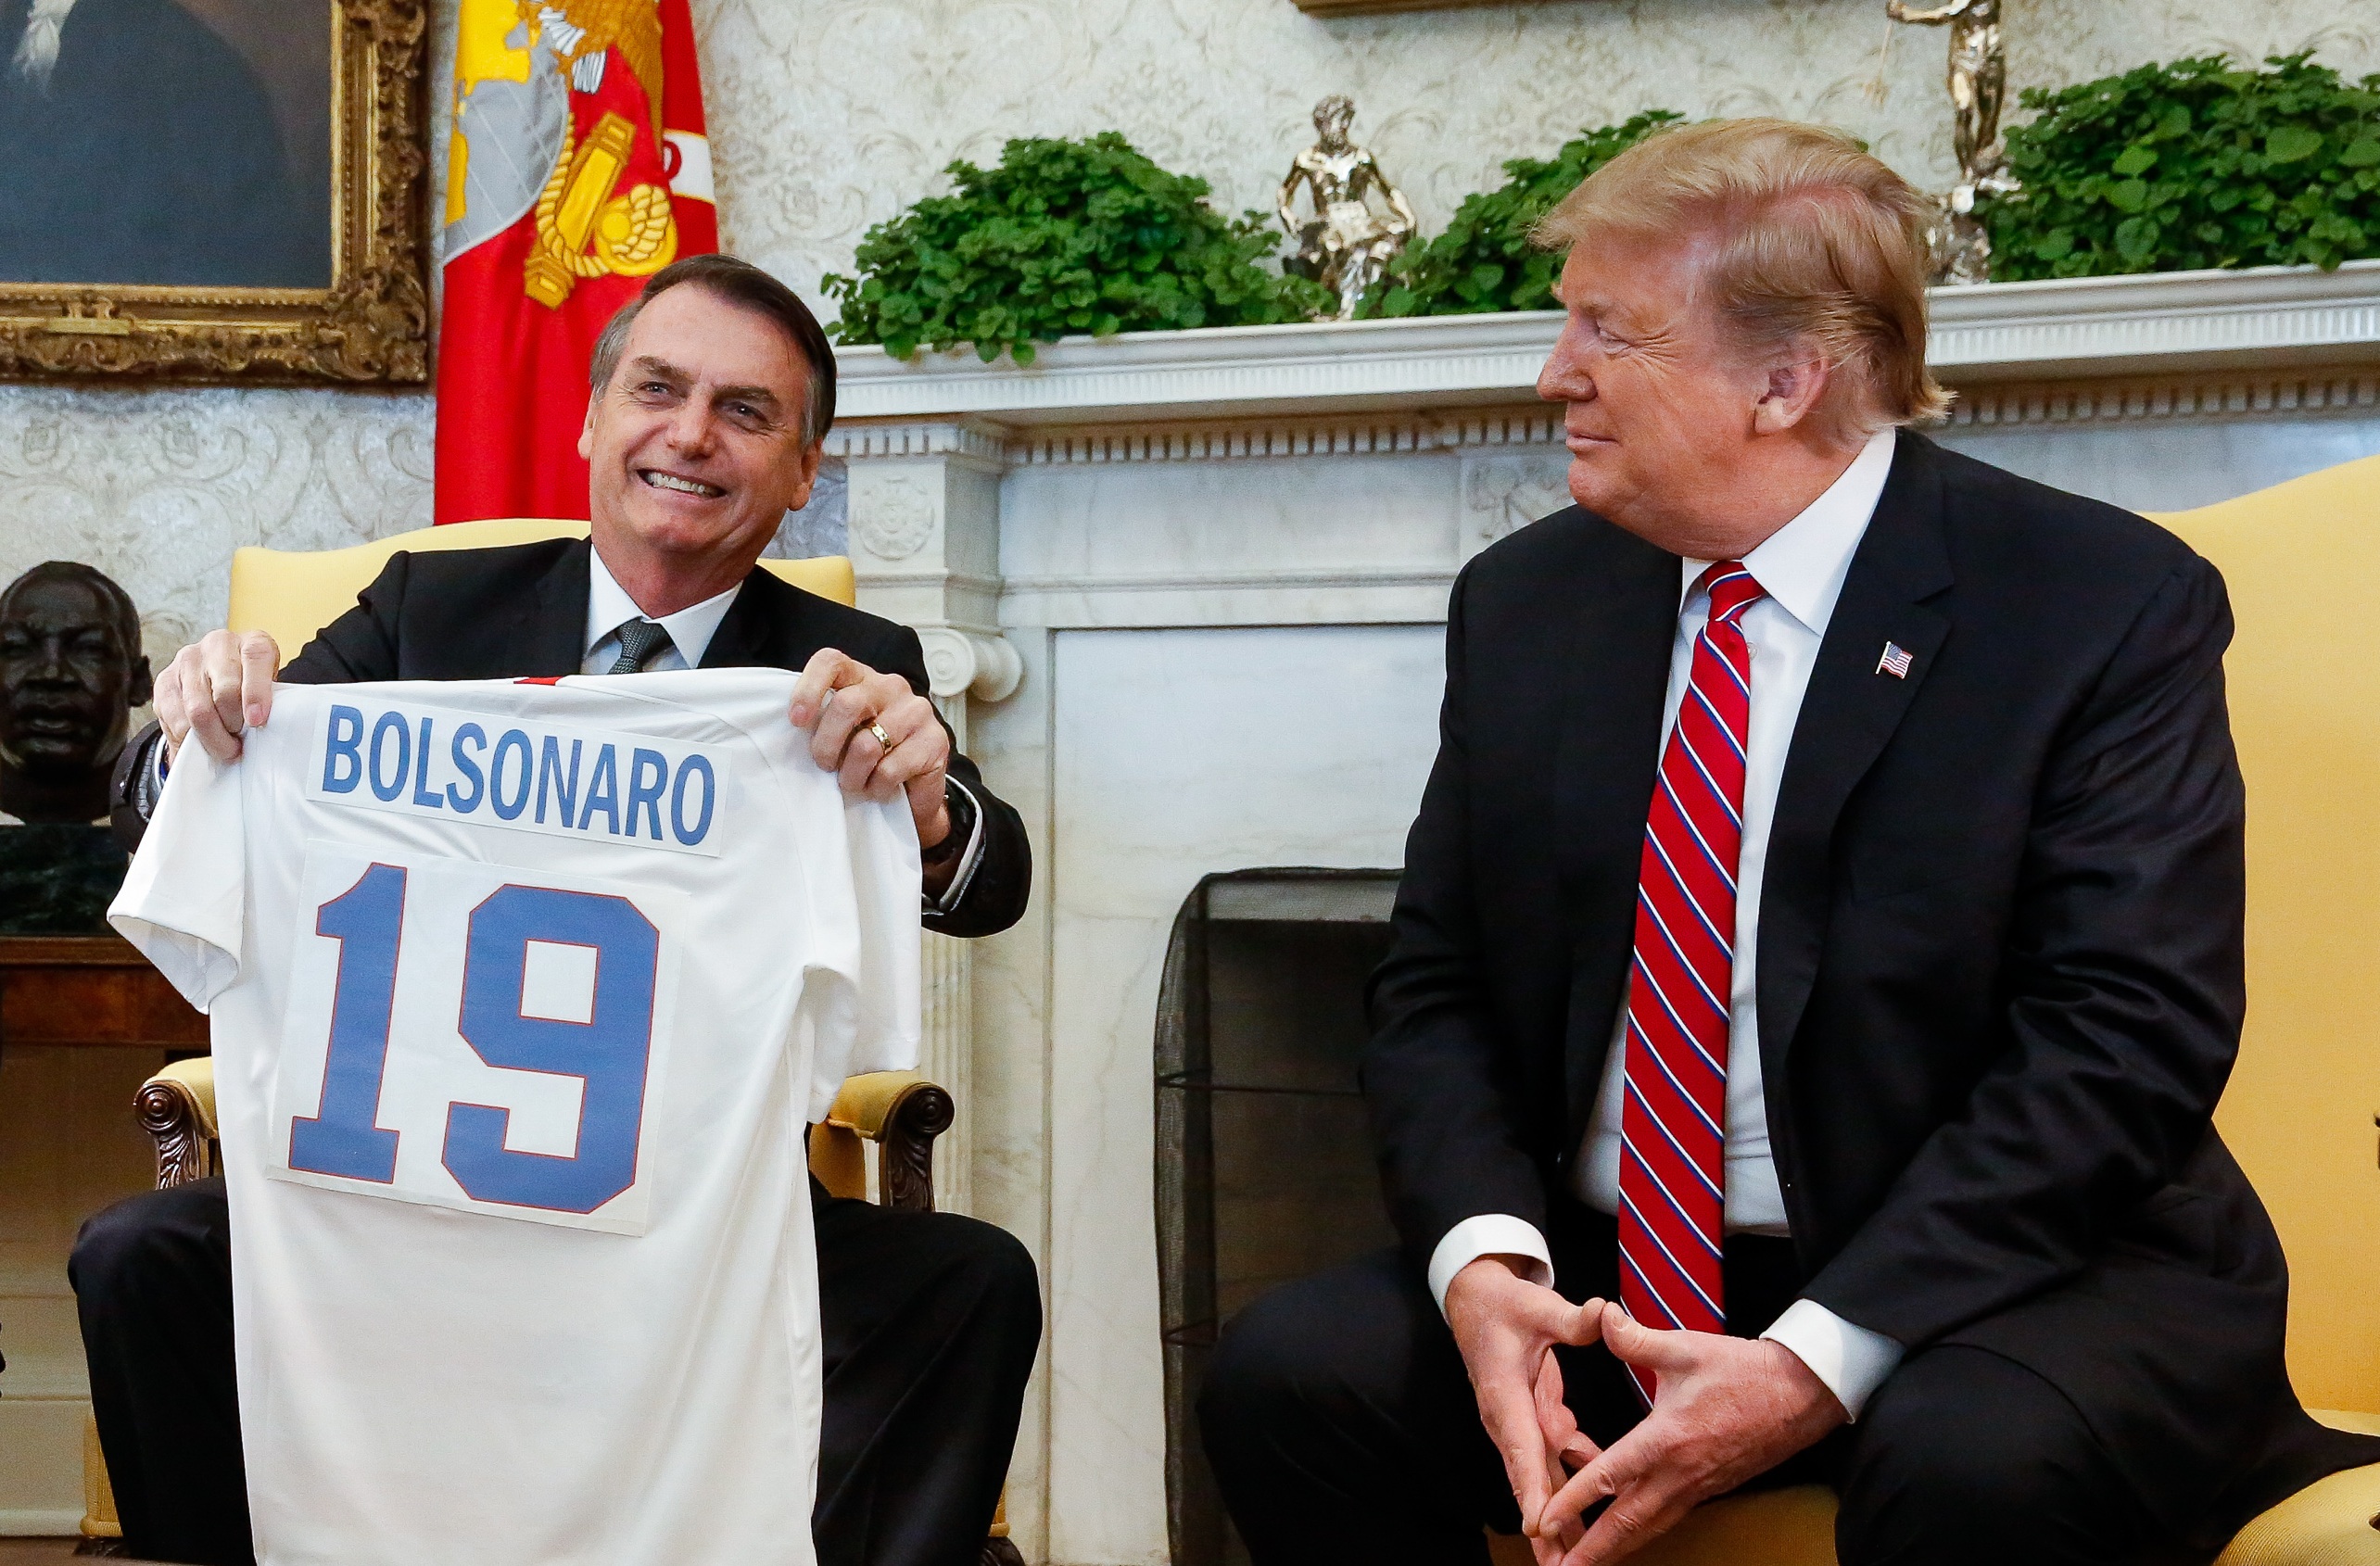 Bolsonaro with President Donald Trump, Washington DC, March 19, 2019